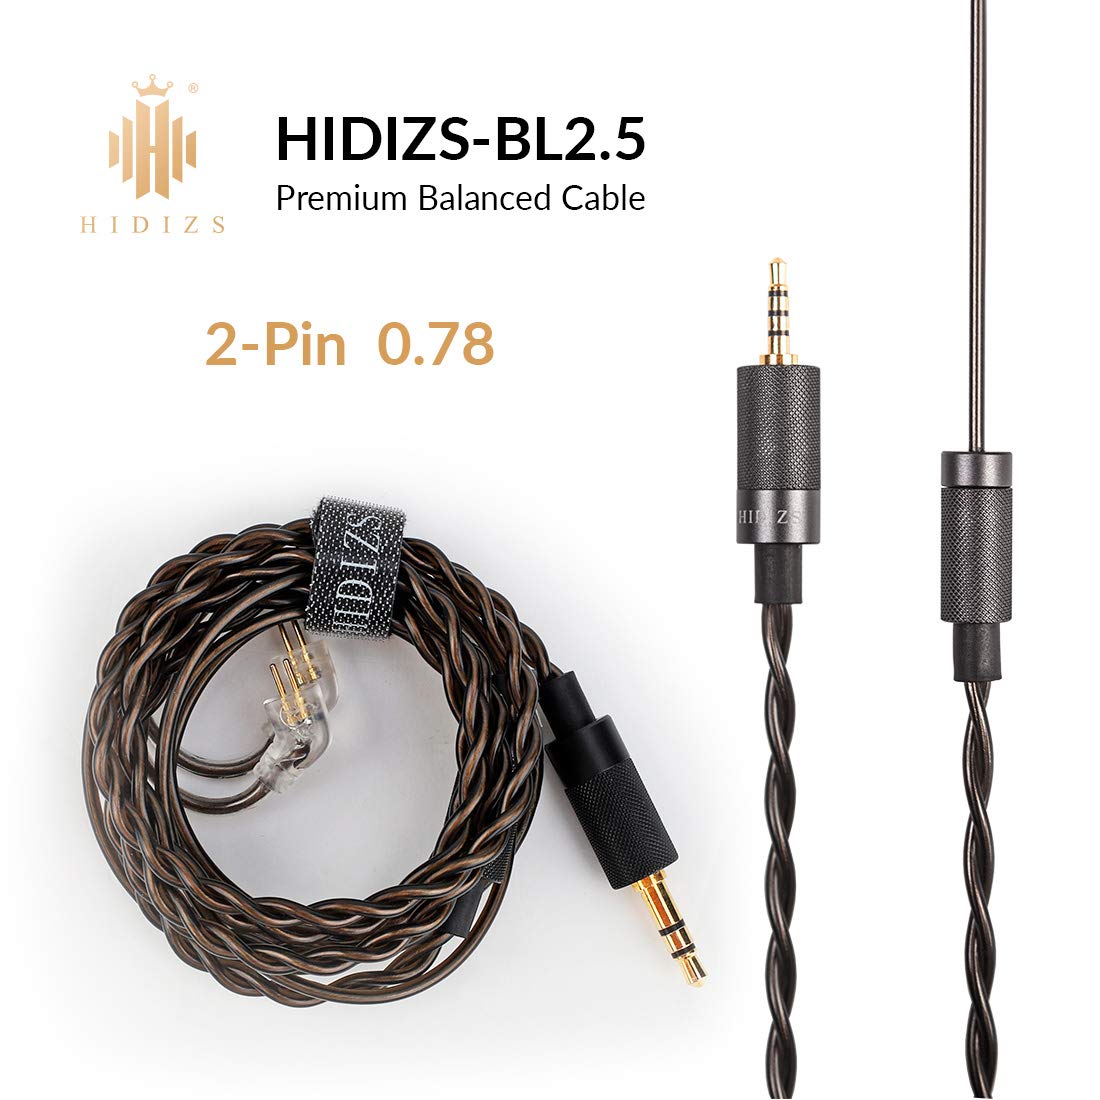 Hidizs 2-Pin Upgrade Cable